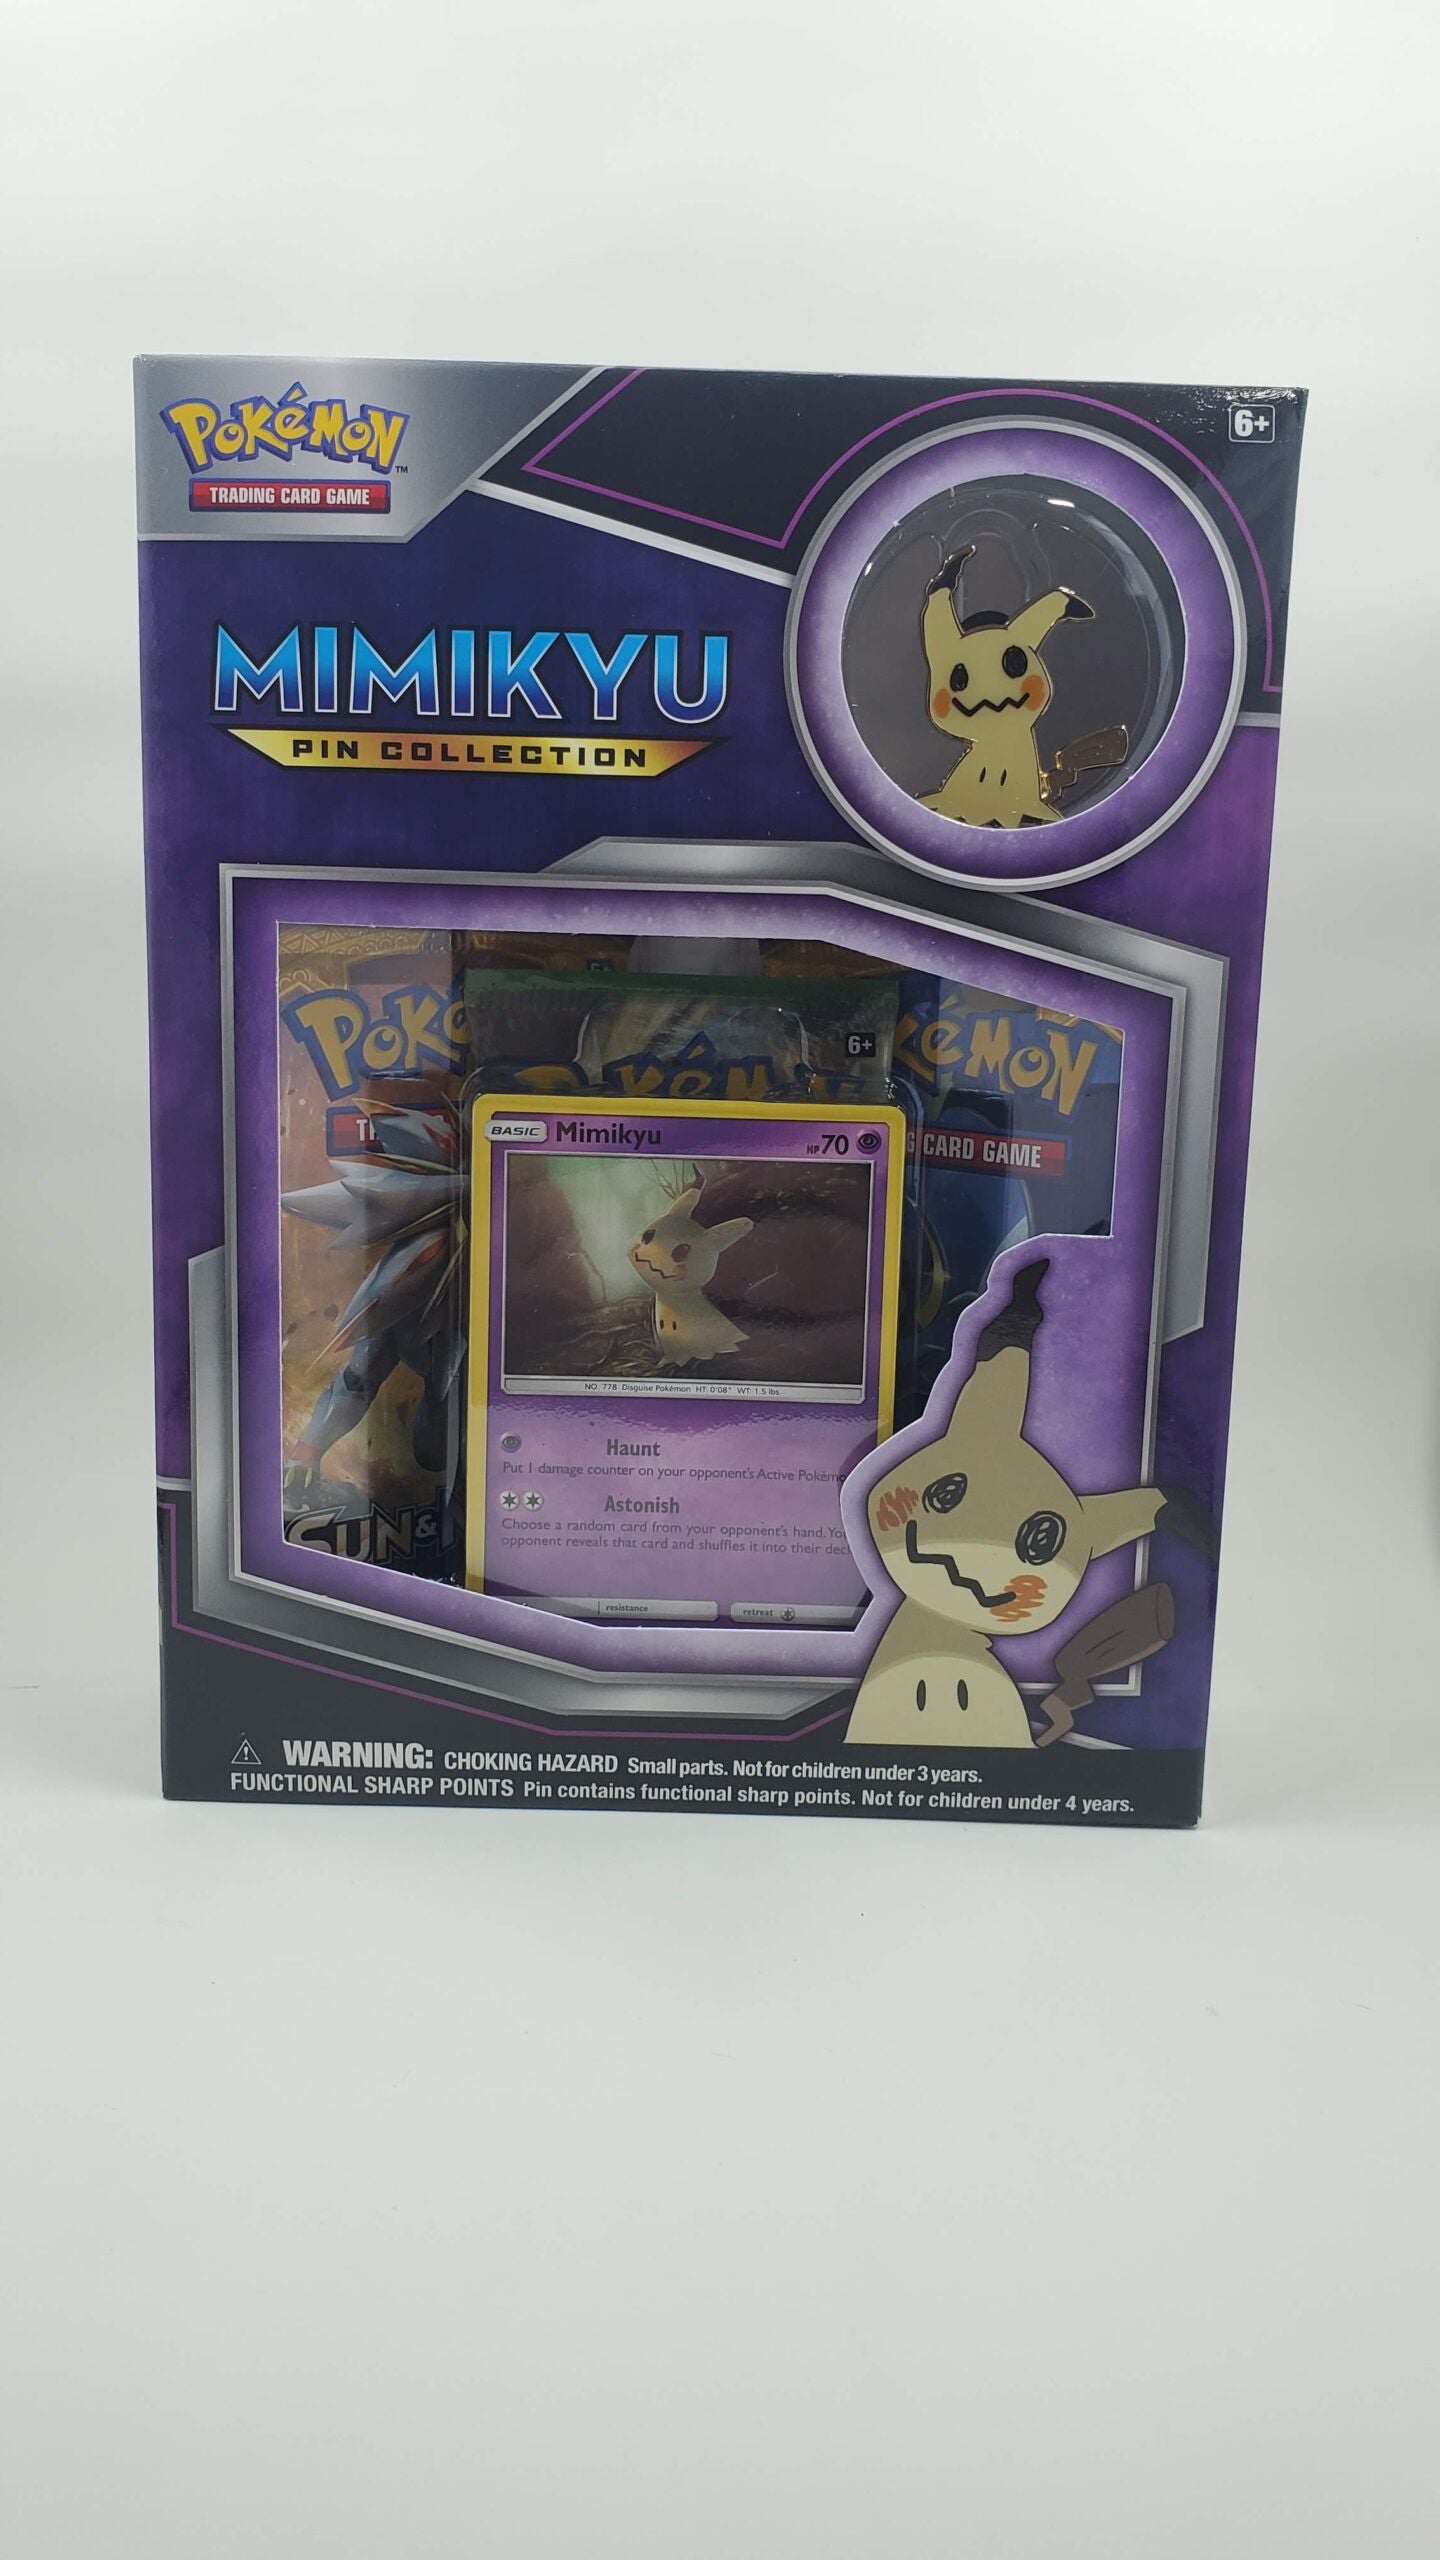 Pokemon Trading Card Game Mimikyu Pin Collection Box